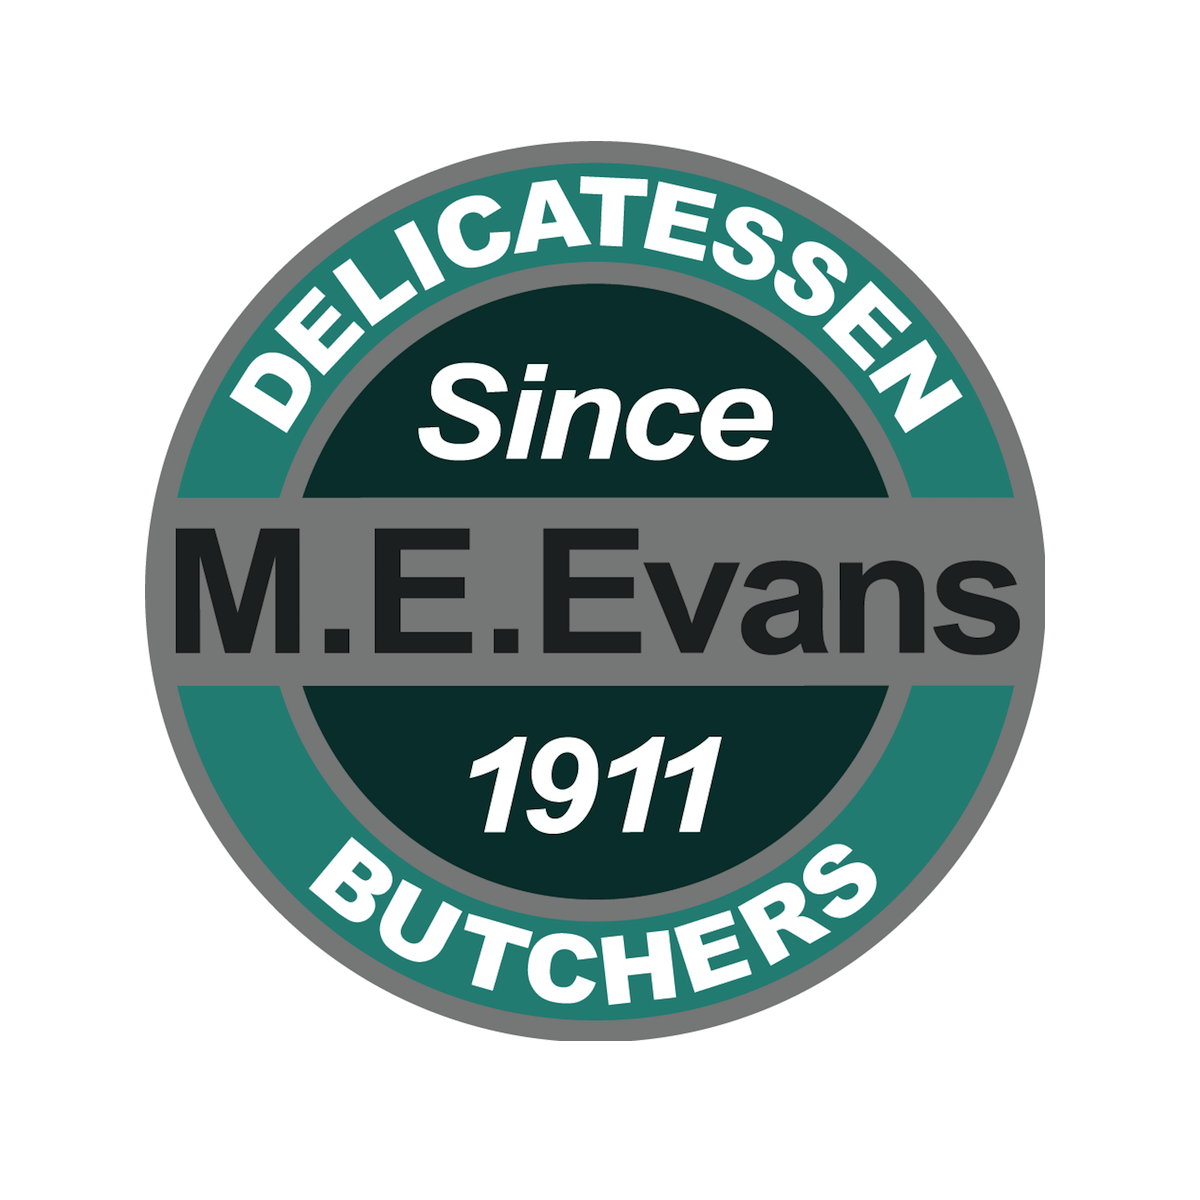 M E Evans Traditional Butchers brand logo